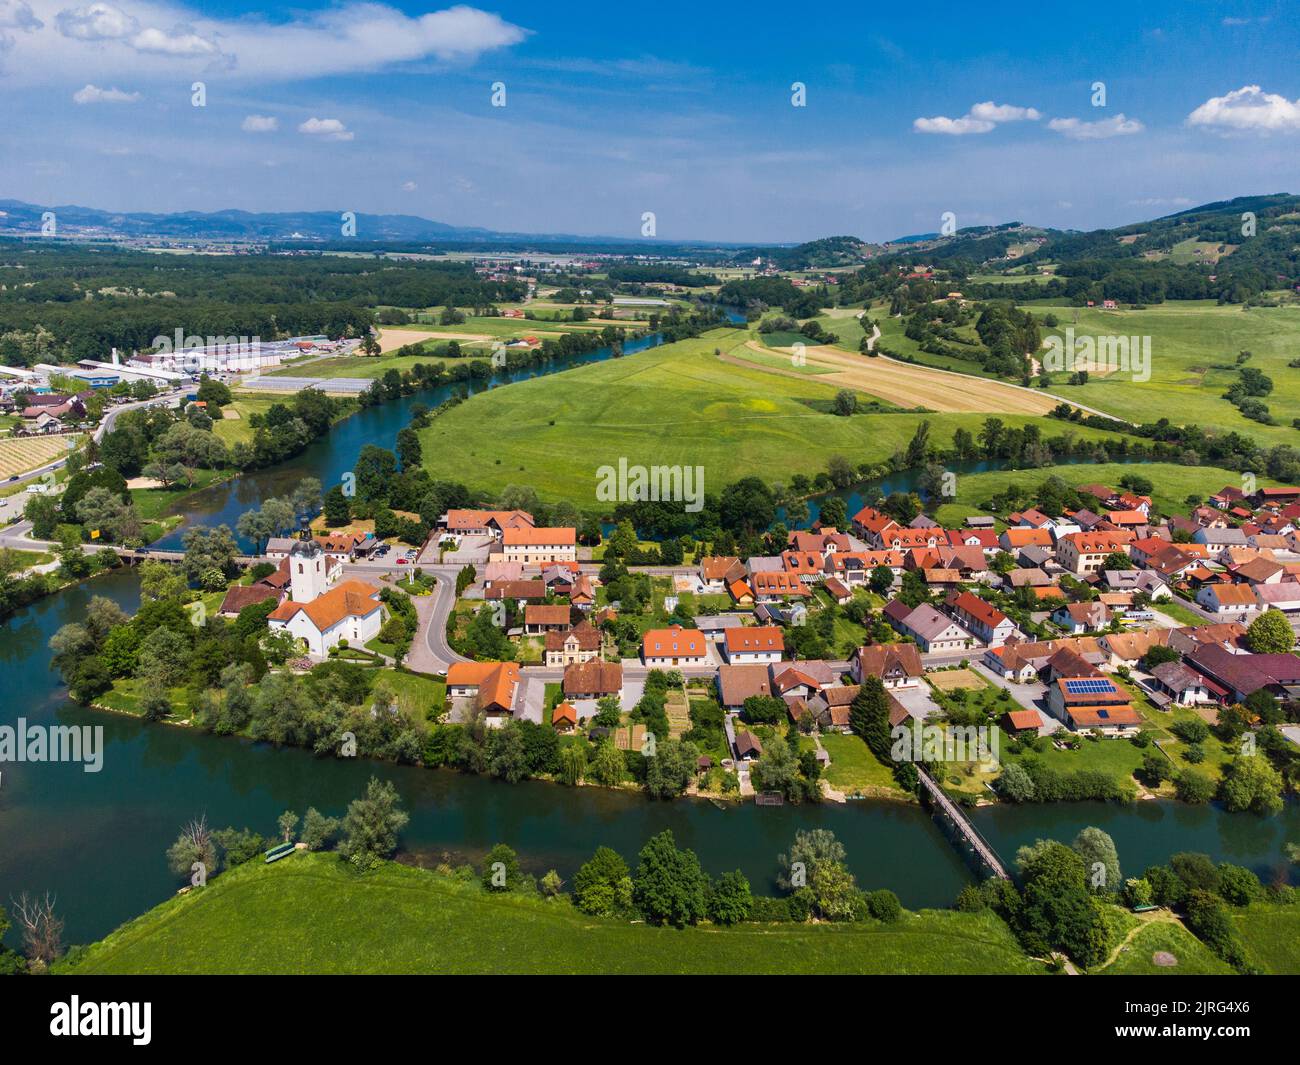 Kostanjevica na Krki Medieval Town Surrounded by Krka River, Slovenia, Europe. Aerial view. Stock Photo